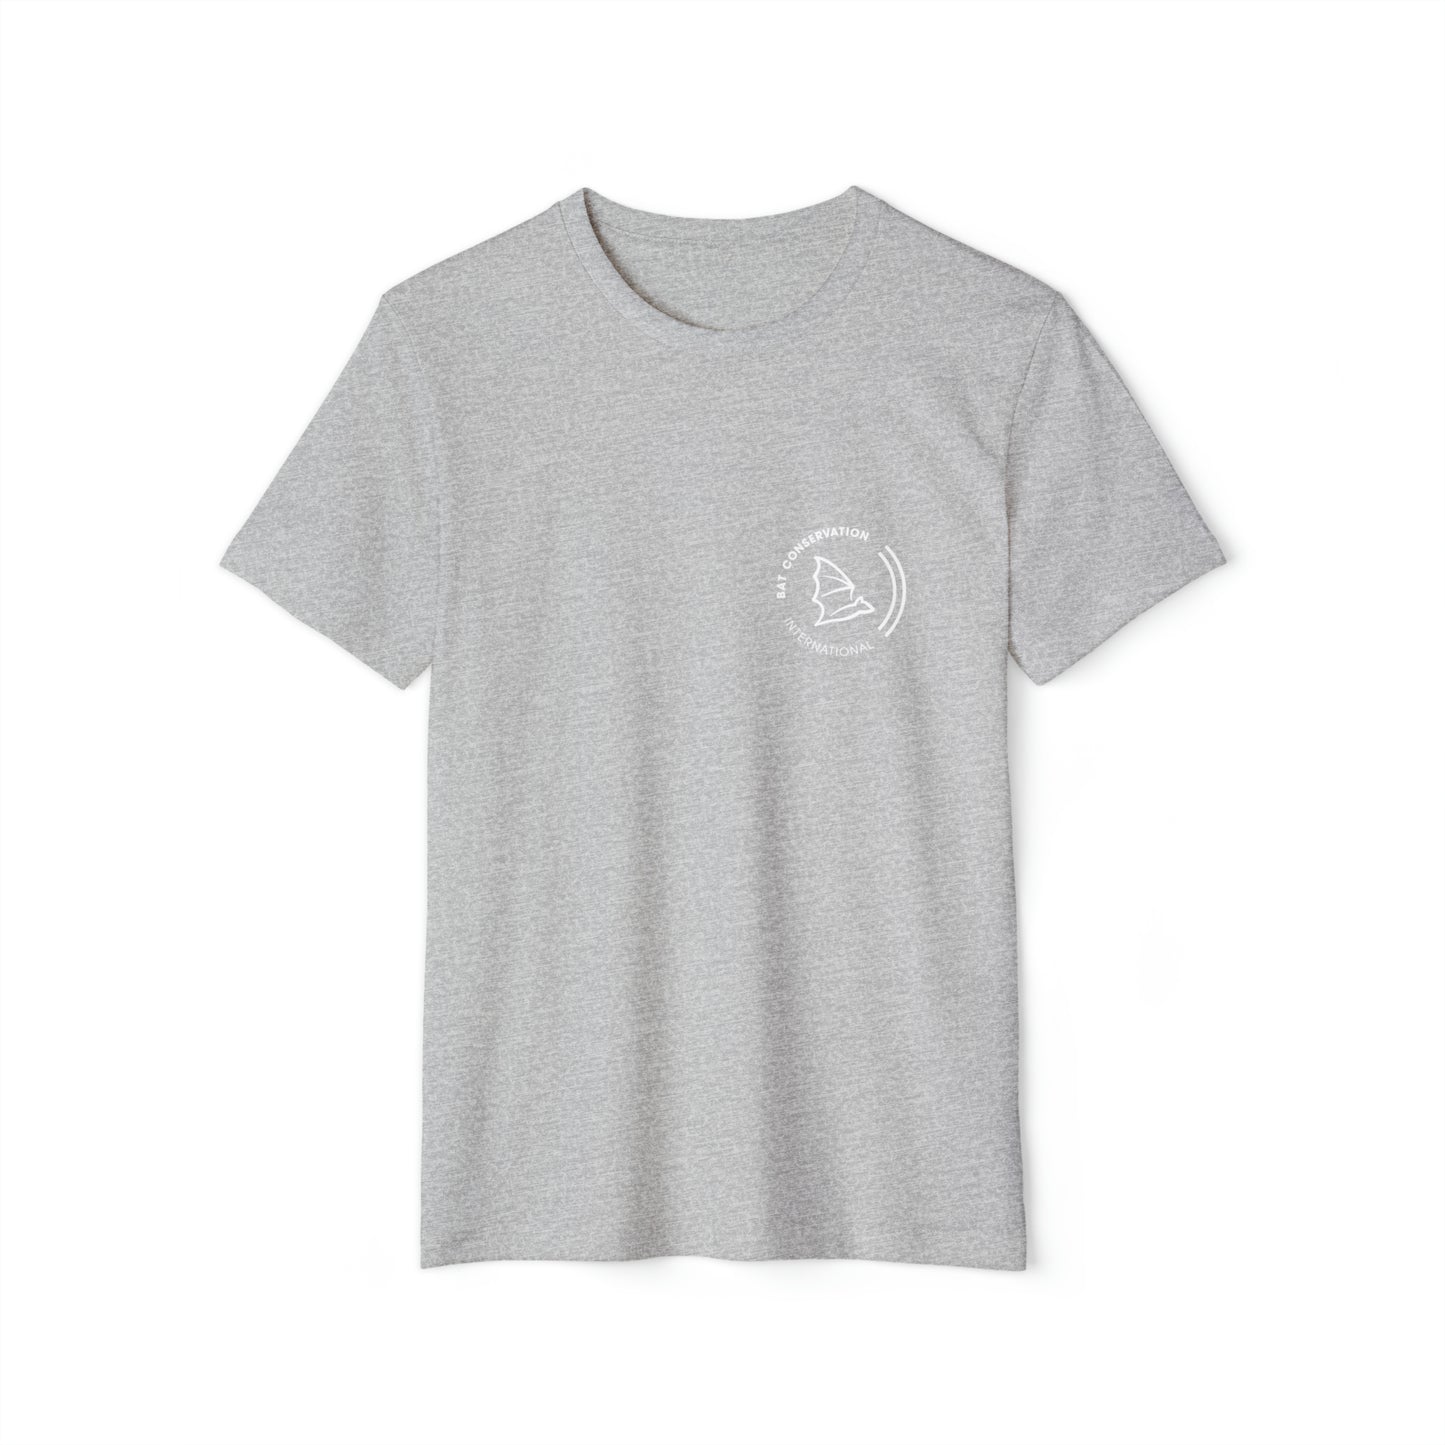 BCI Logo - Unisex Recycled Organic T-Shirt